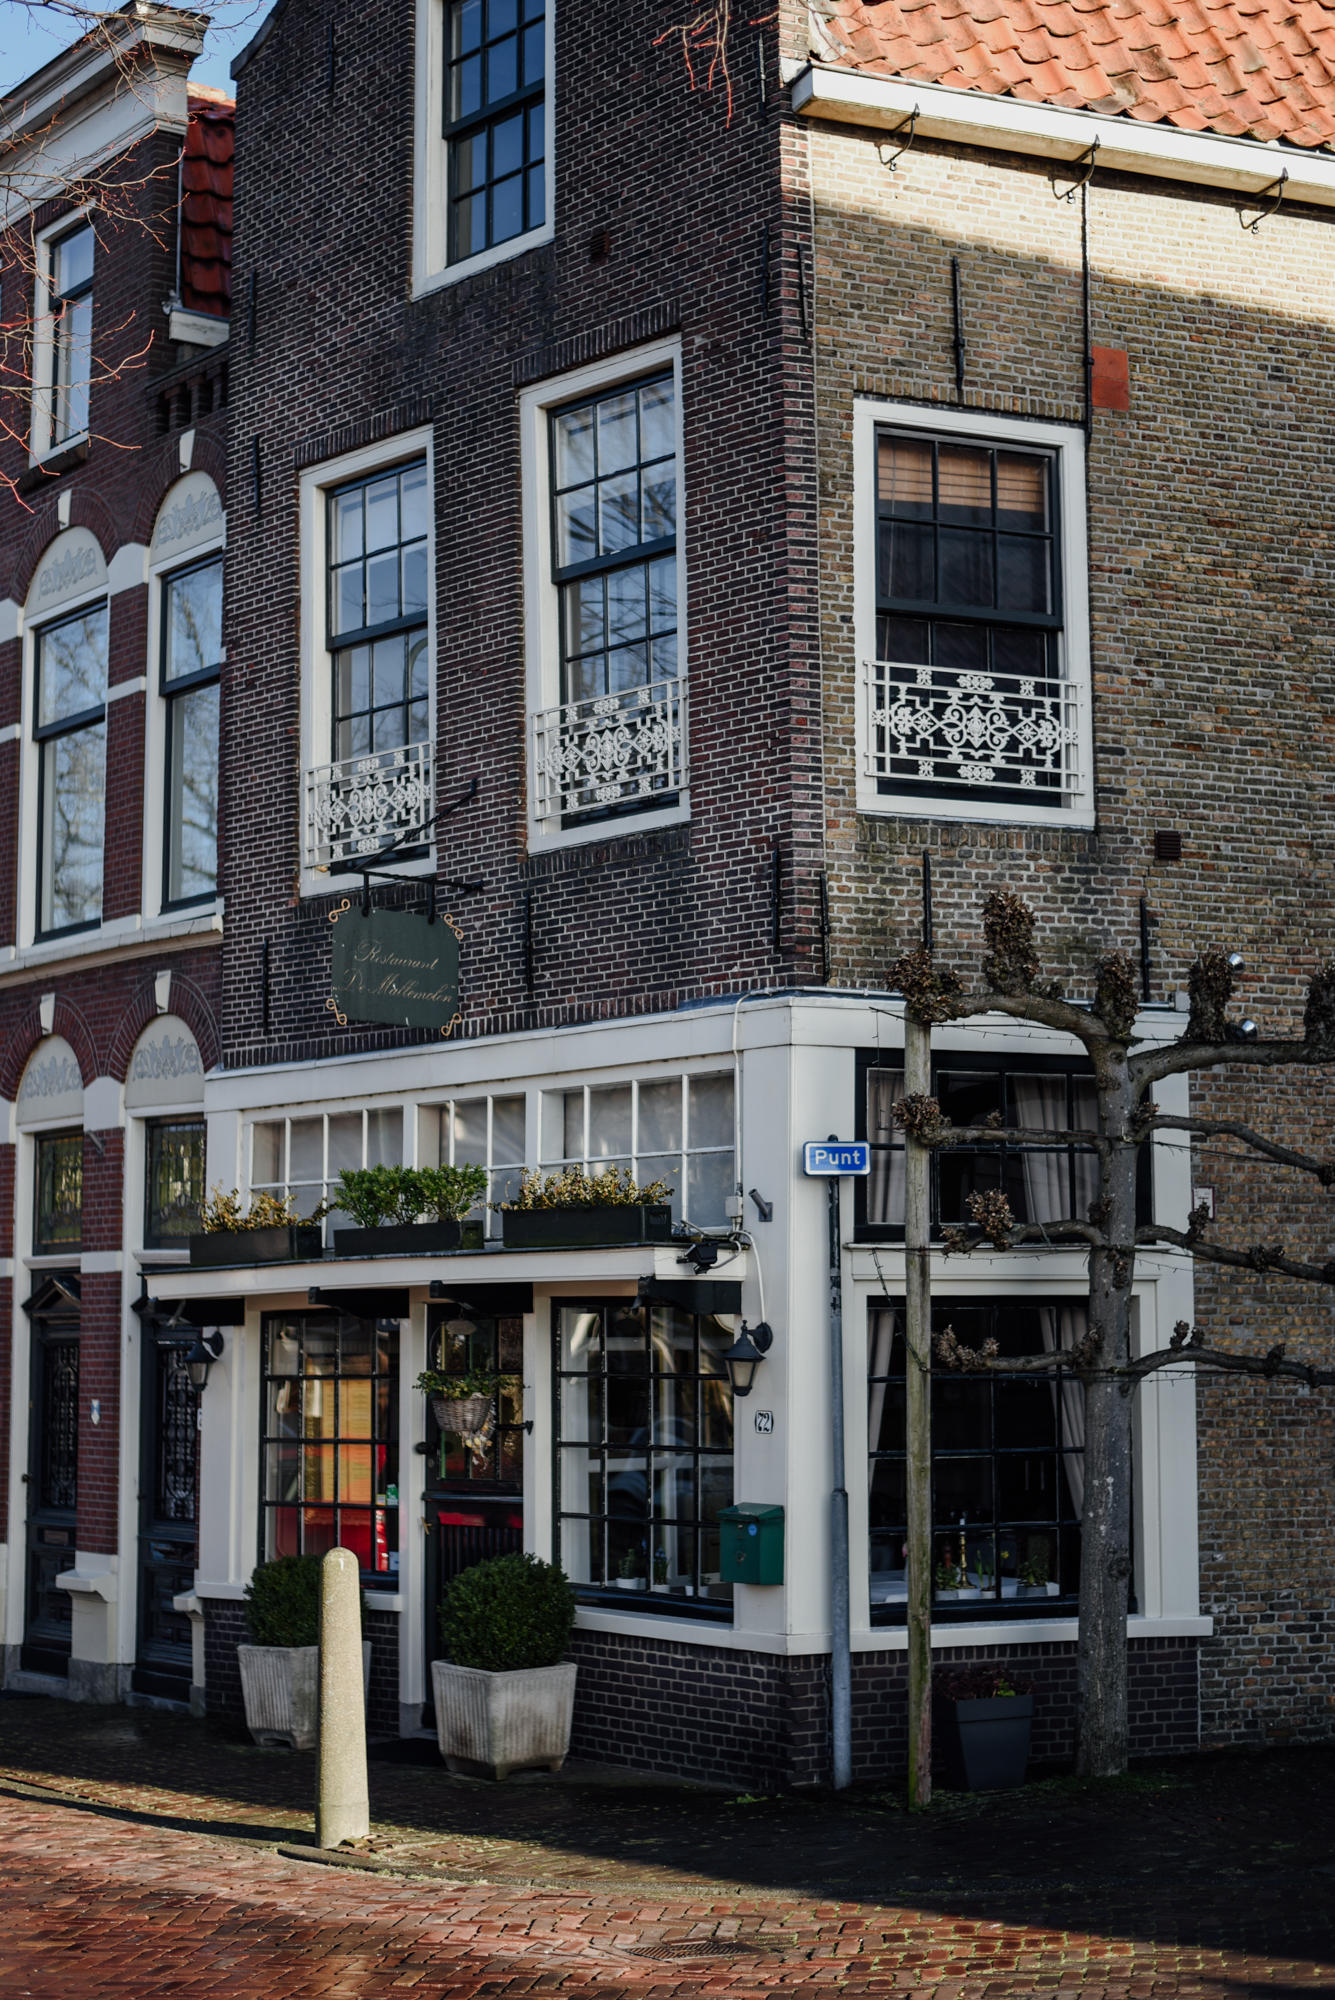 Street corner in Gouda, The Netherlands